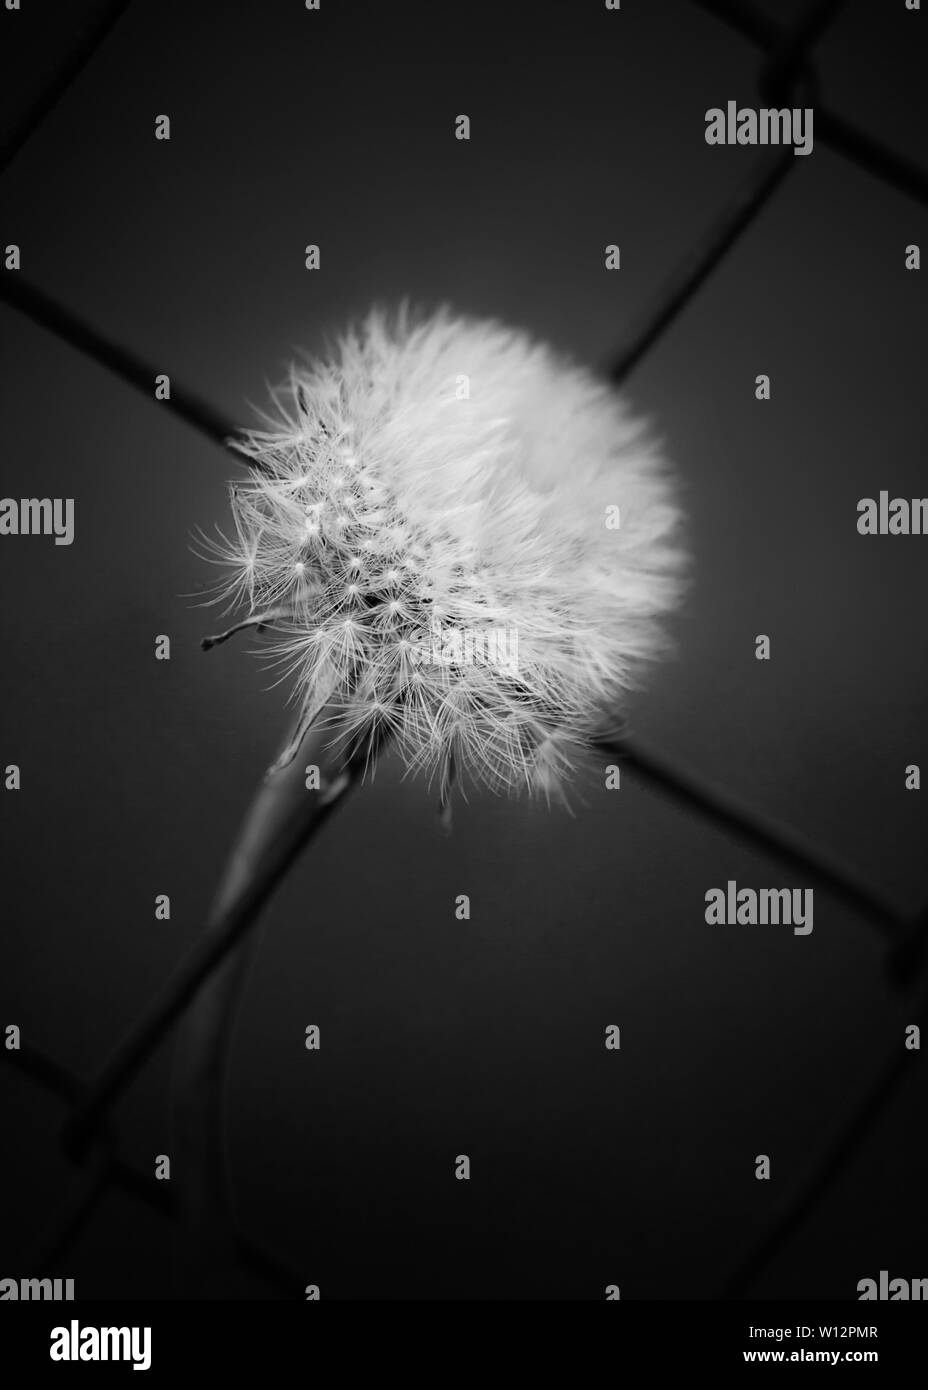 Photo of one dandelion taken close-up. Macro shoto. Black and white photo. Stock Photo